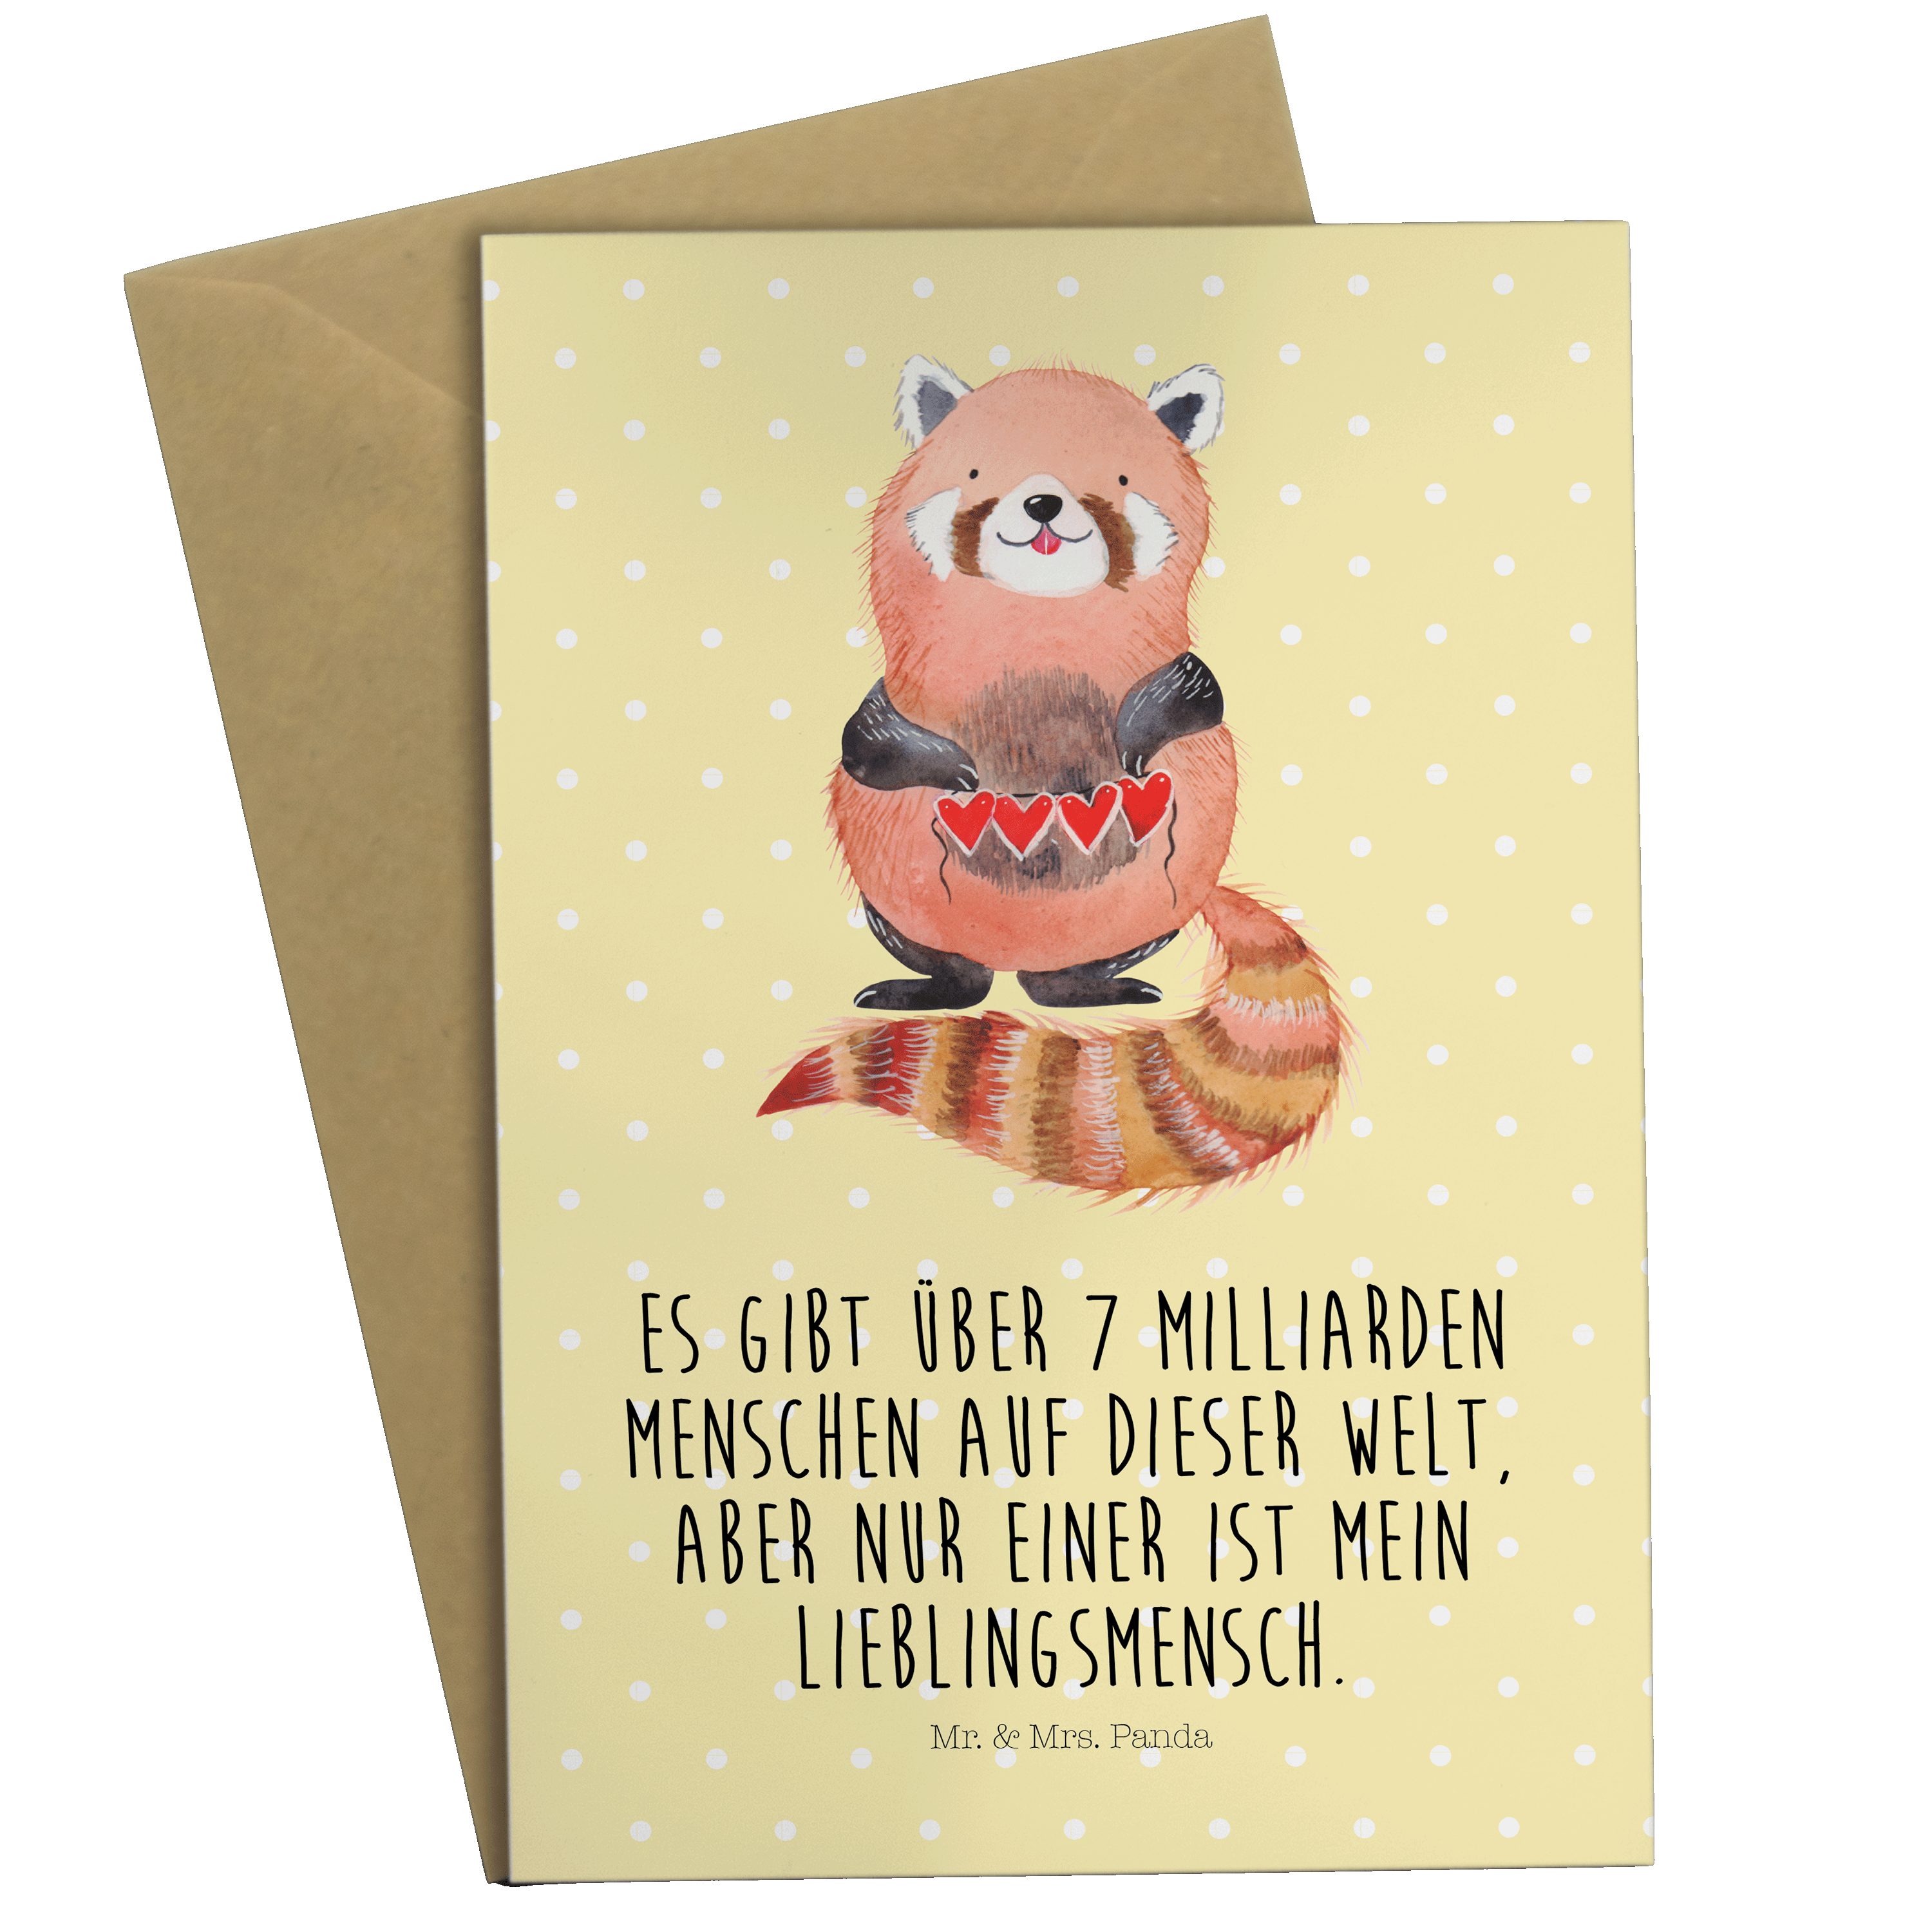 Mr. & Mrs. Panda Grußkarte Roter Panda - Gelb Pastell - Geschenk, Hochzeitskarte, Glückwunschkar